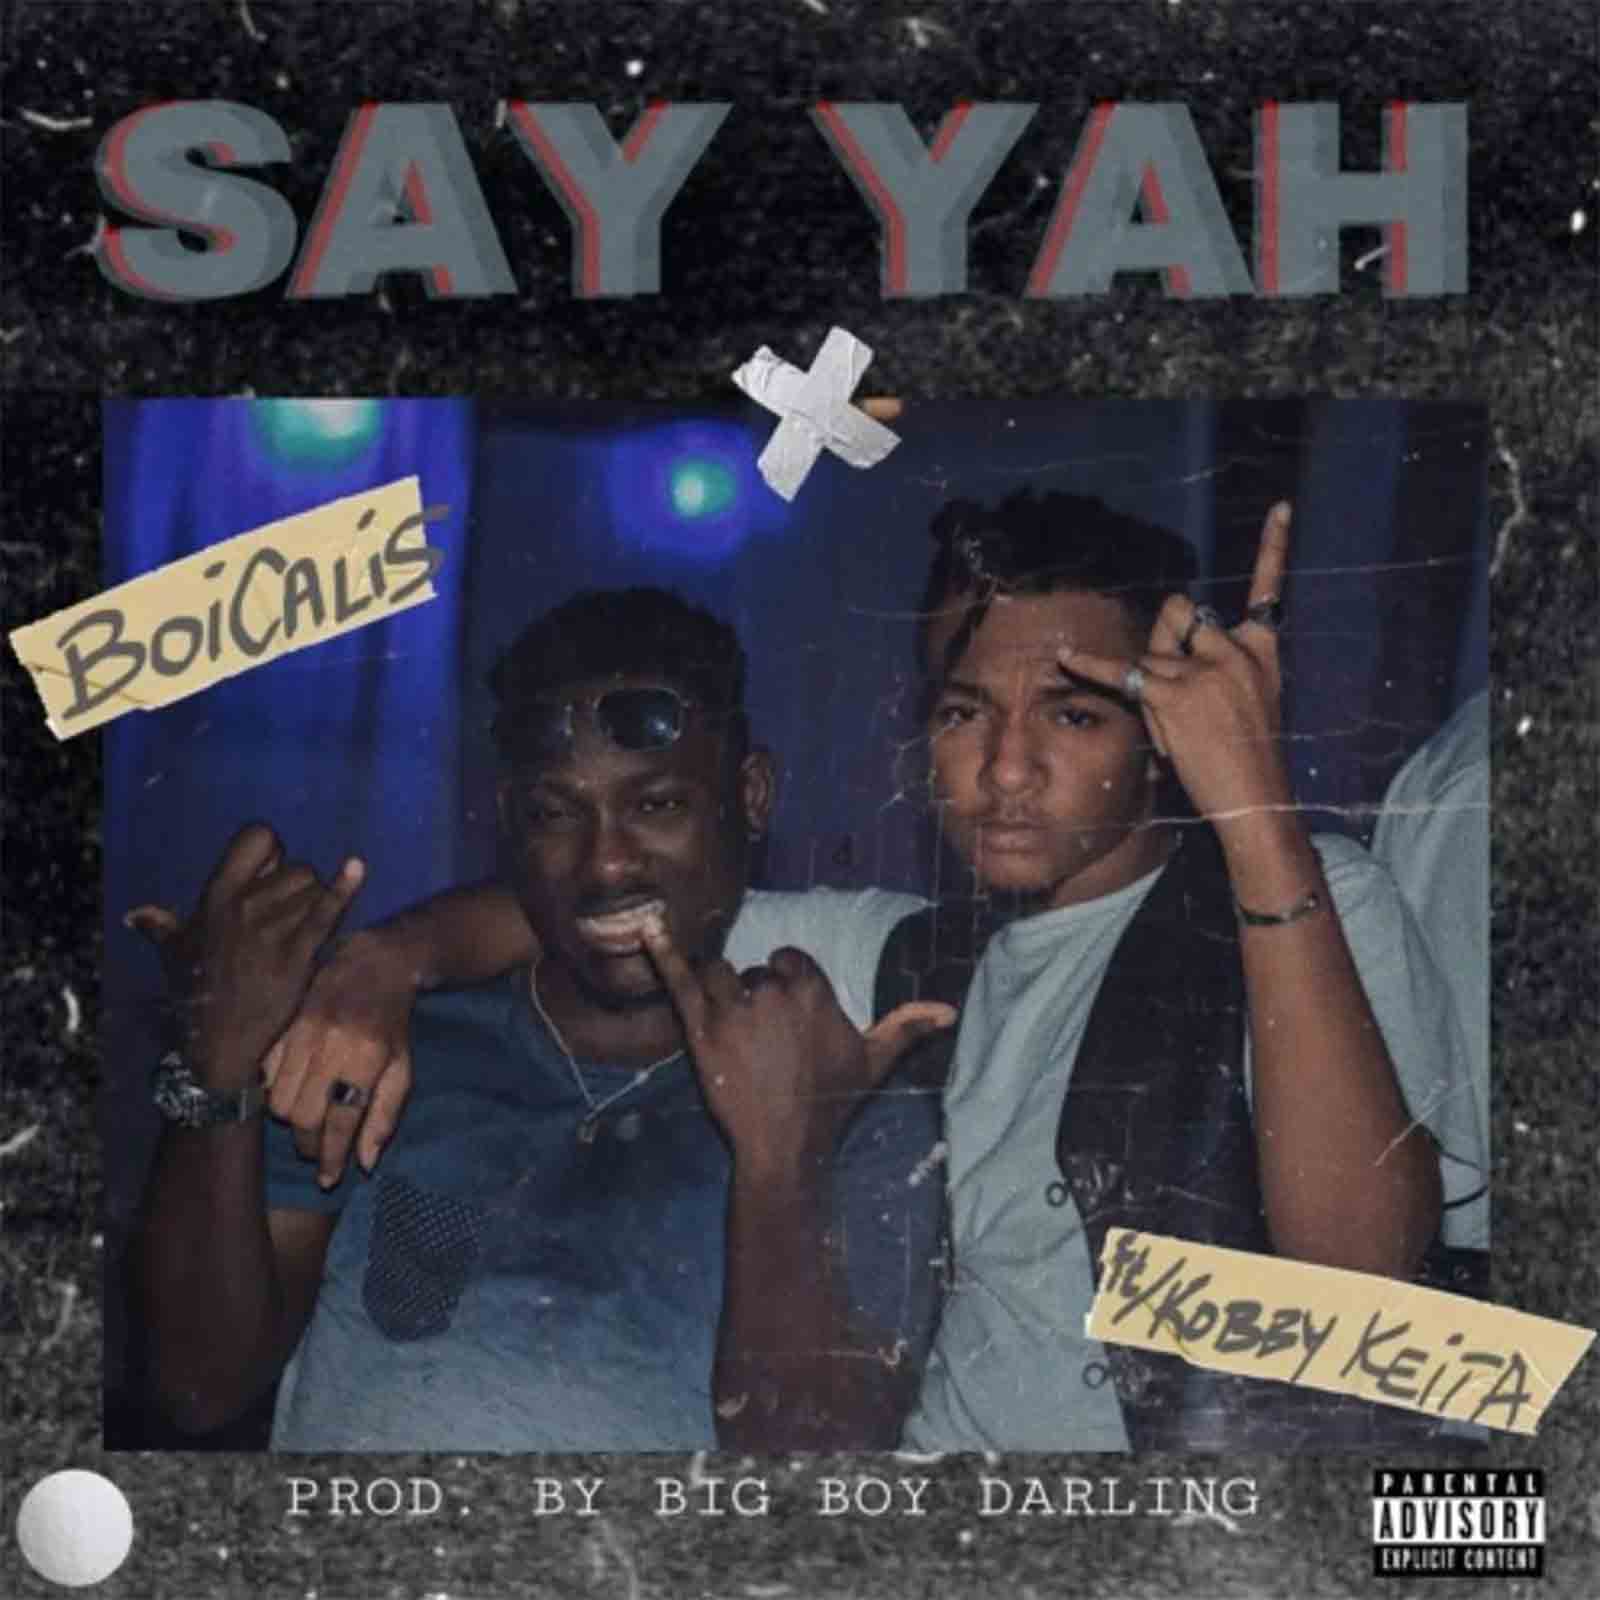 Say Yah by Boicalis feat. Kobby Keita